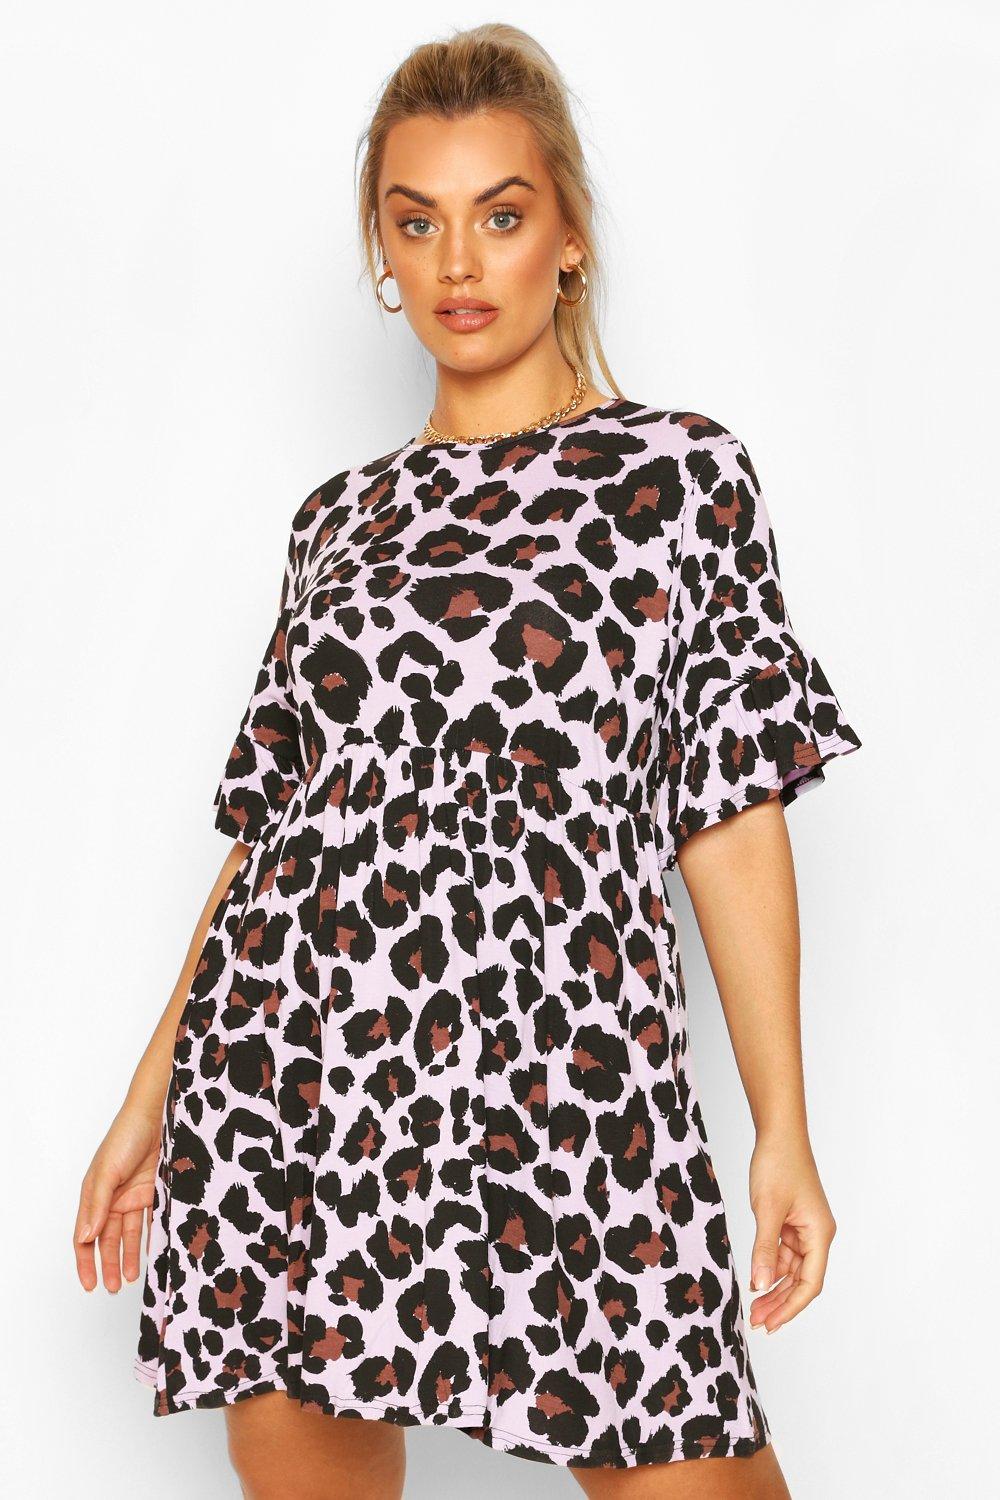 boohoo dress leopard